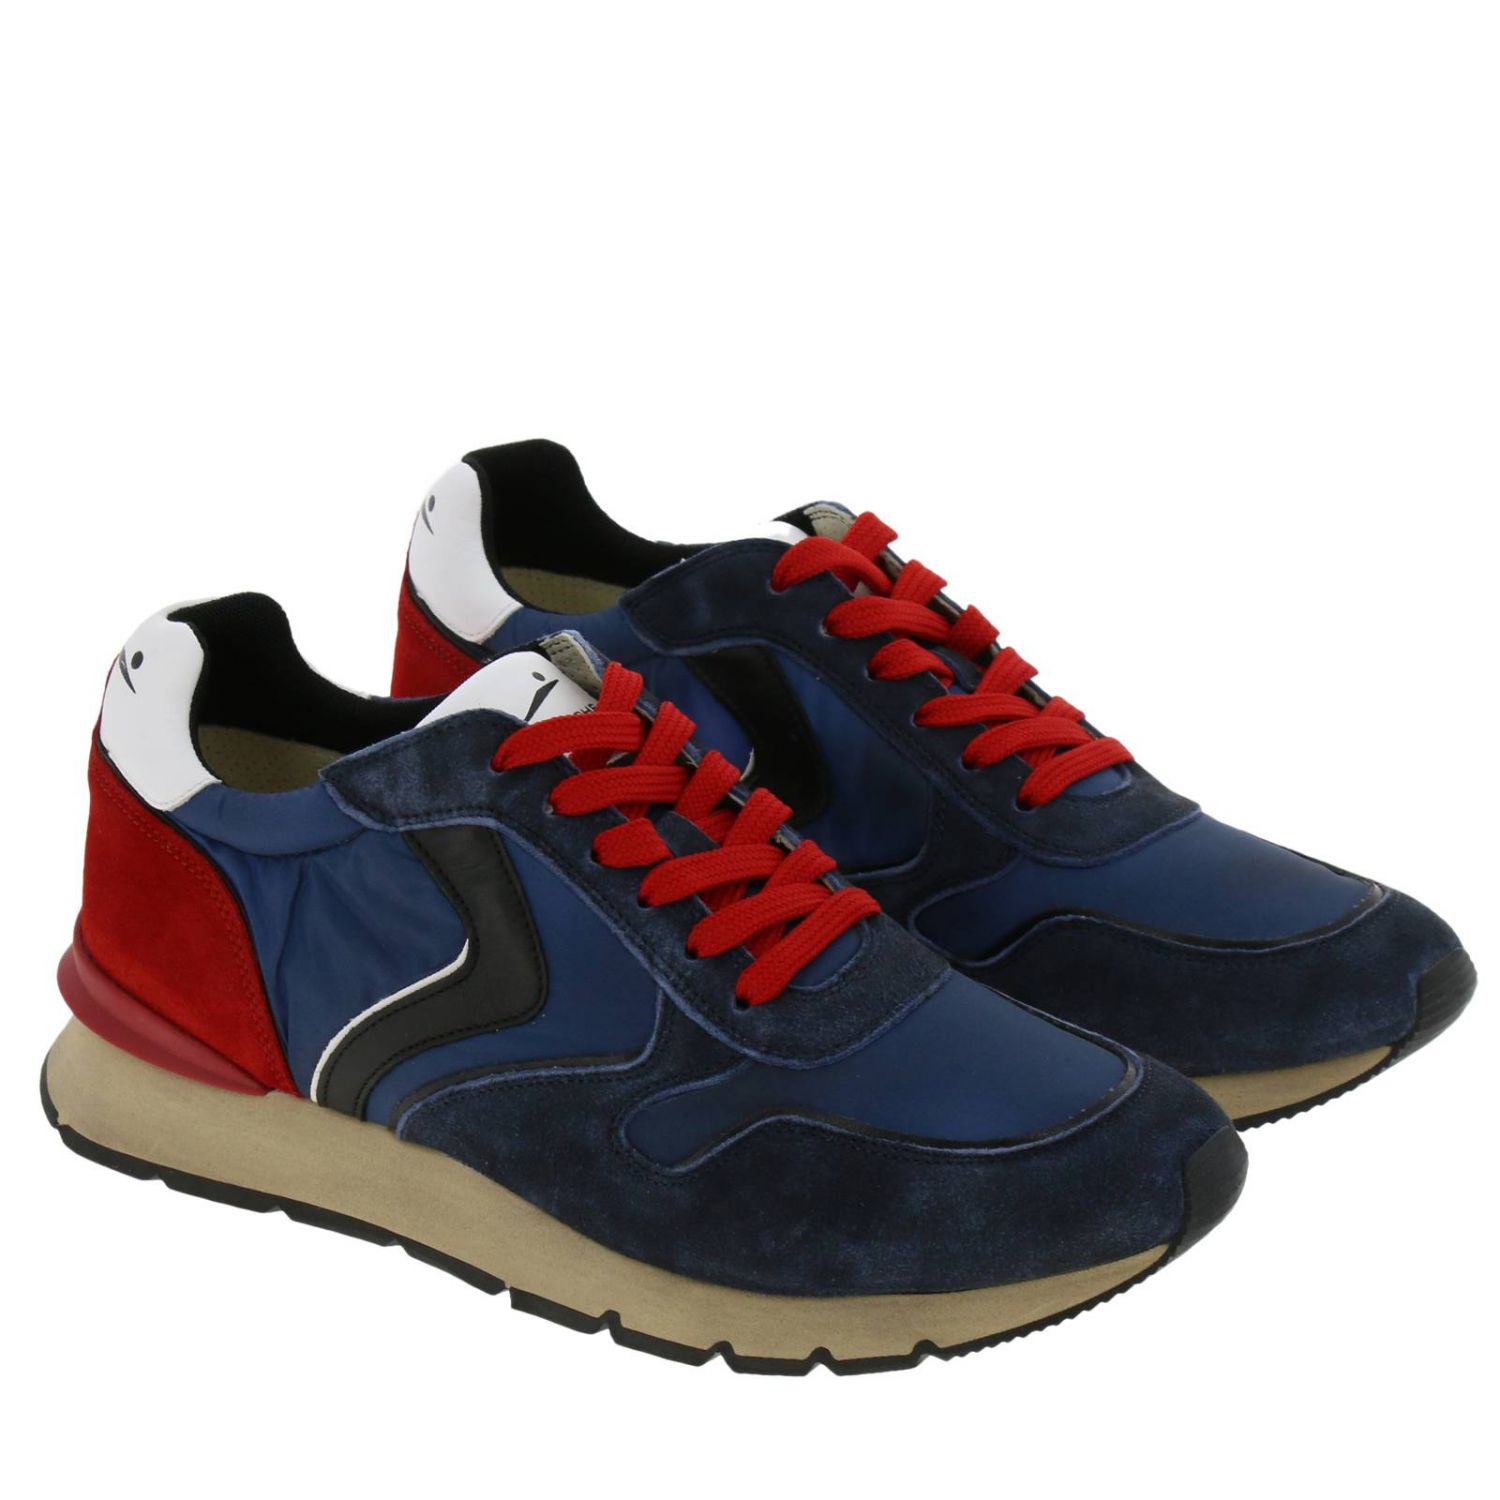 Voile Blanche Outlet: Shoes men - Blue | Sneakers Voile Blanche 2012764 ...